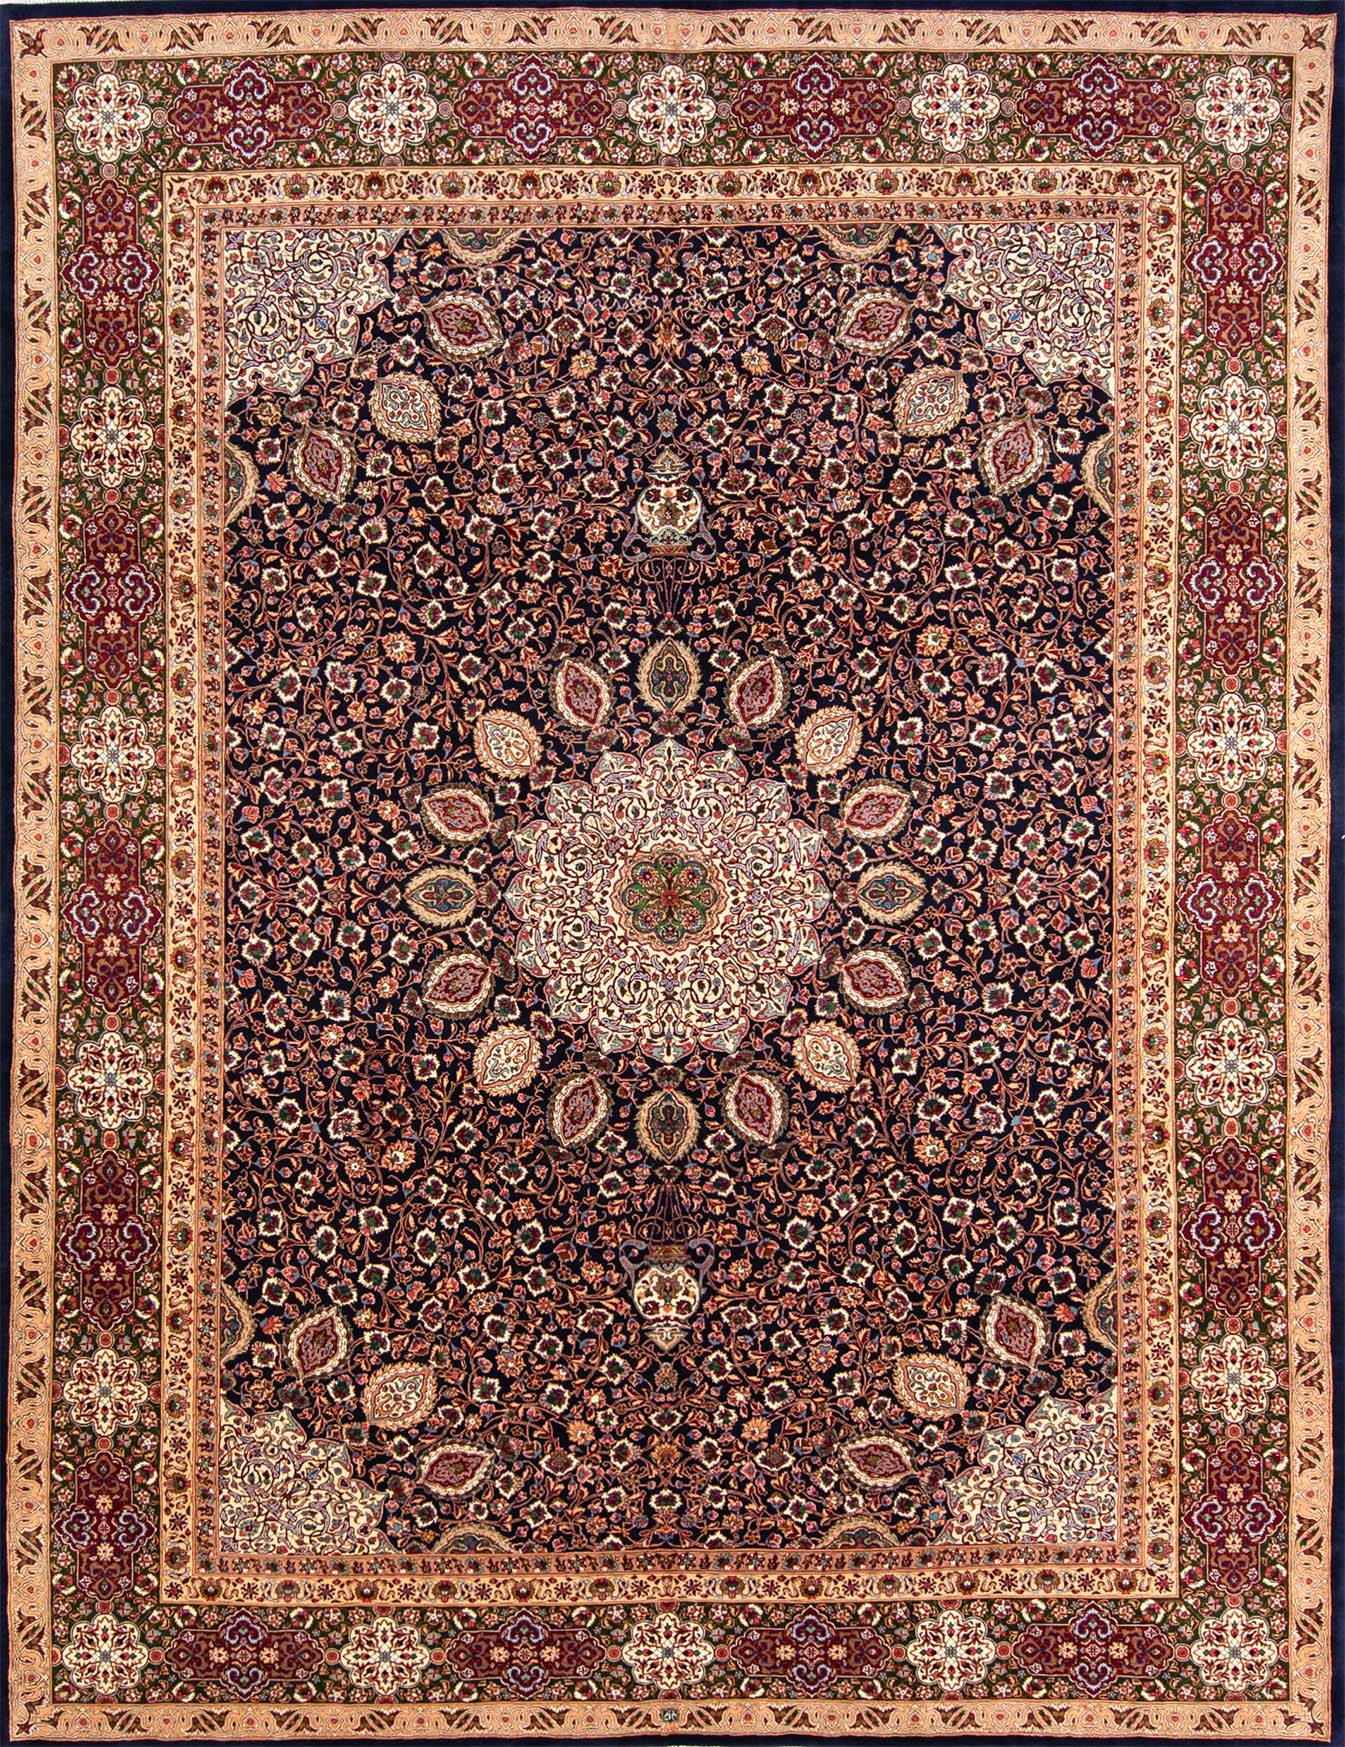 Persian Tabriz rug Shah Abbas rug in navy blue color. Size. 10x13